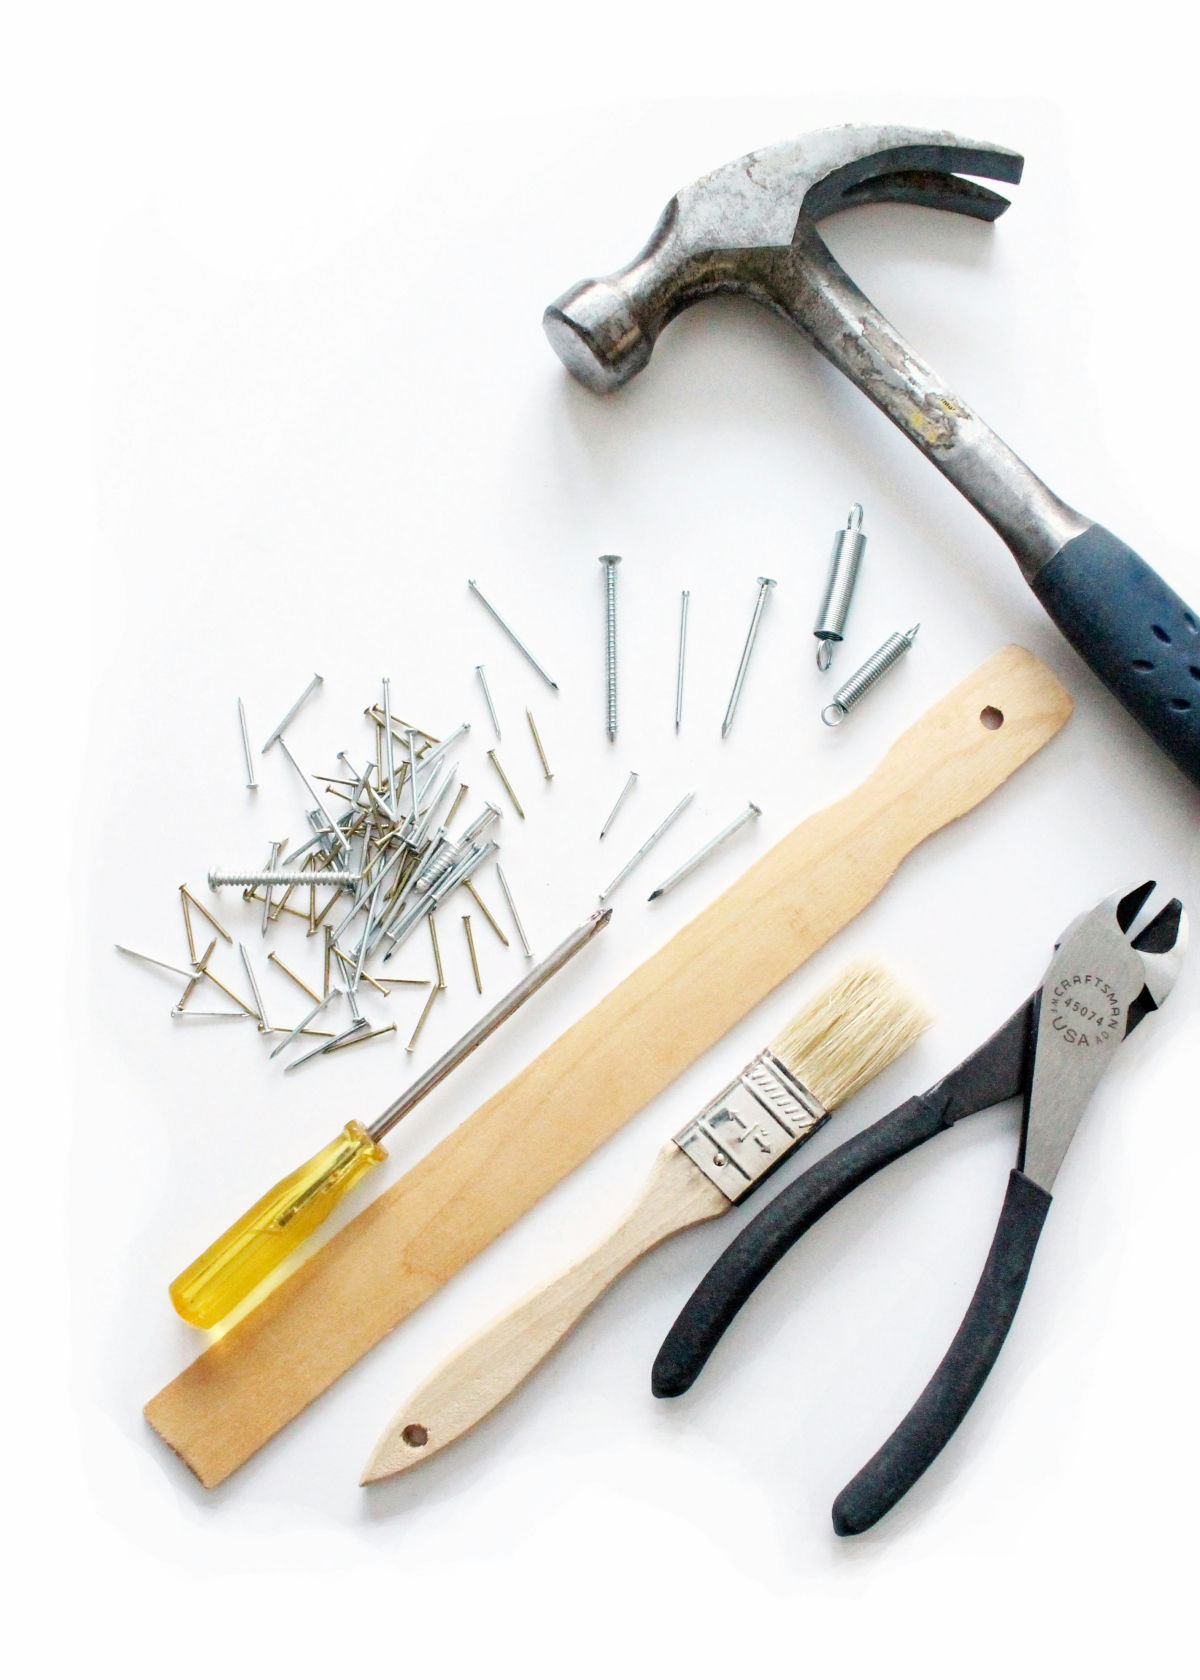 safety organization and tool maintenance